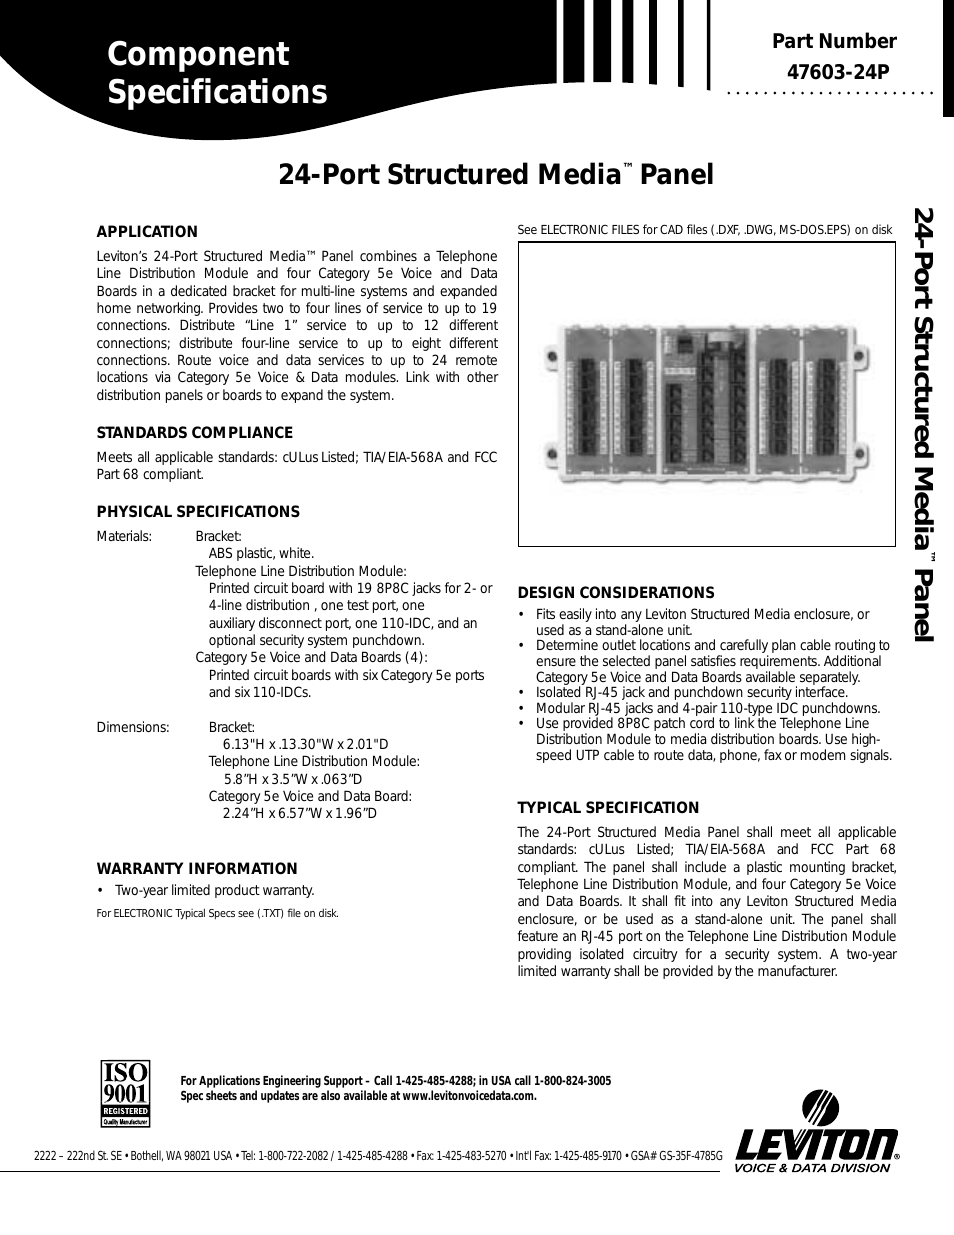 24-Port Structured Media Panel 47603-24P